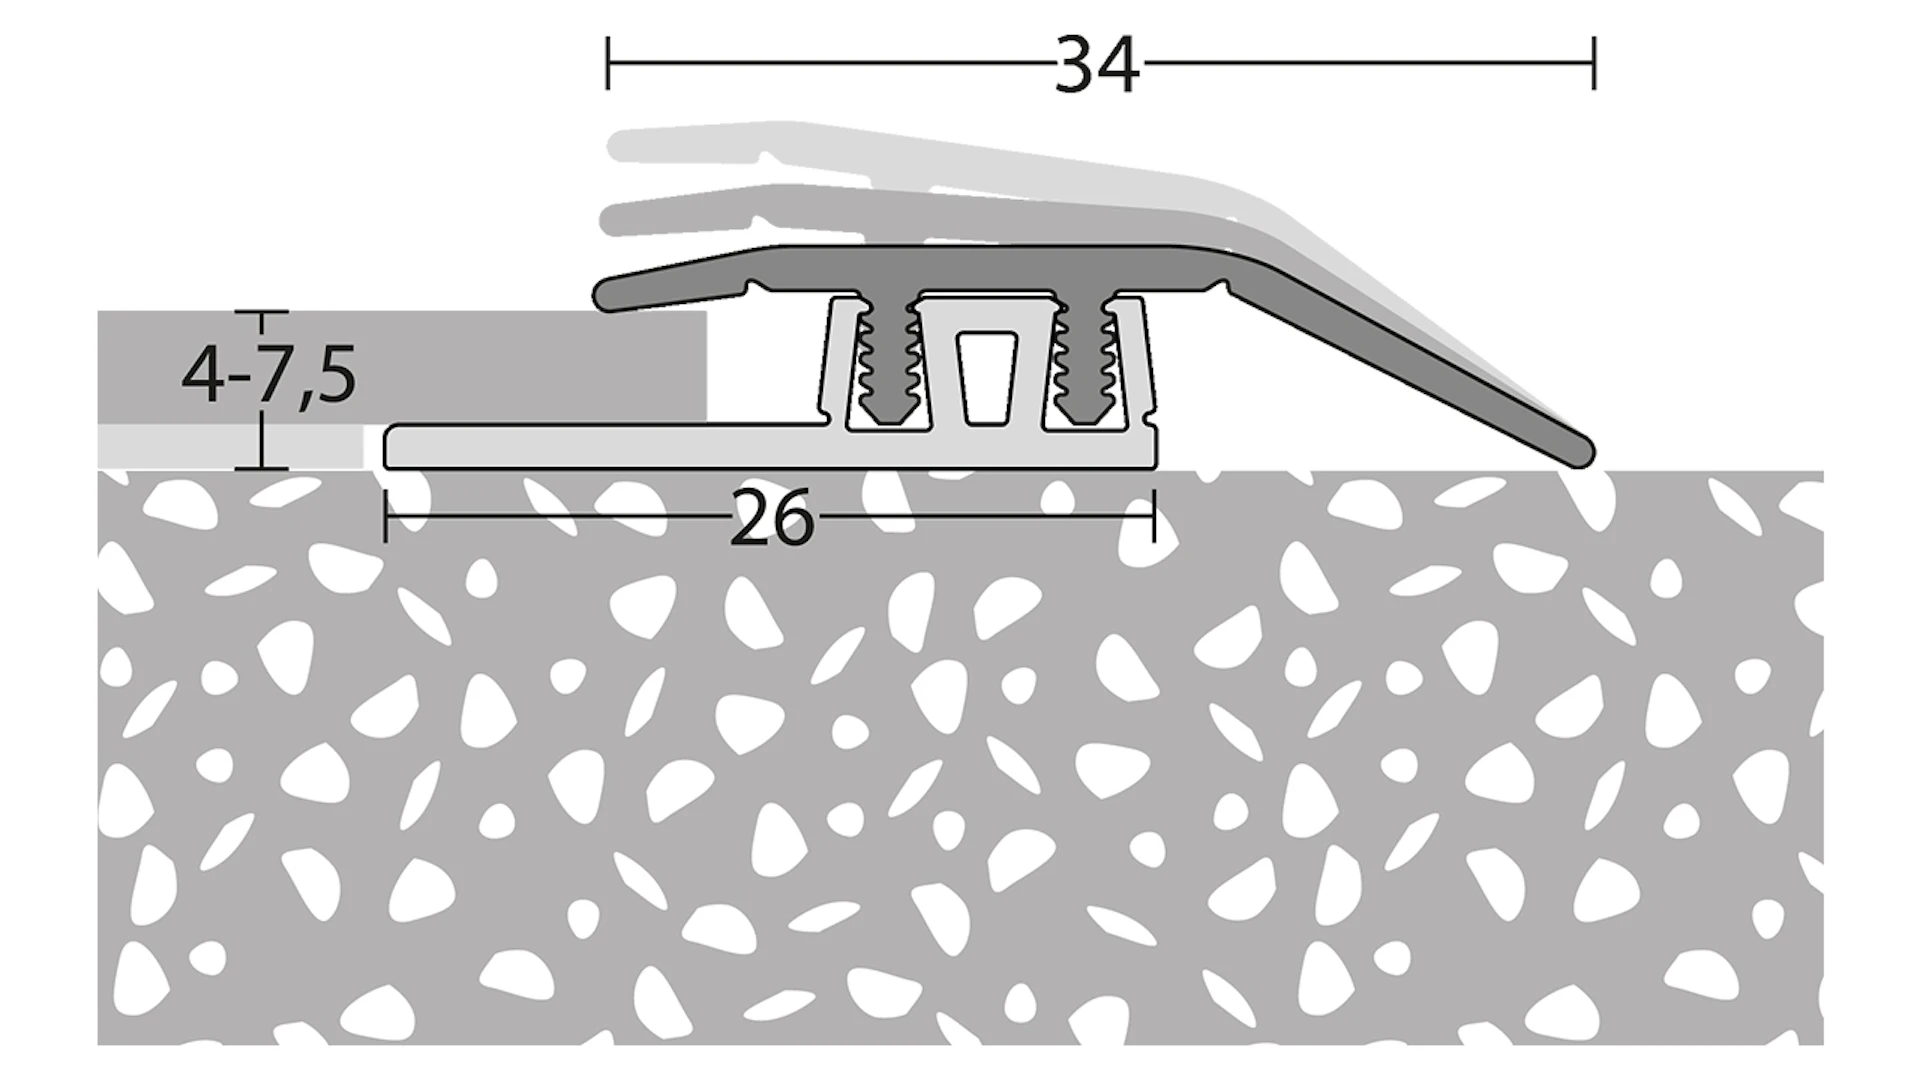 Prinz adjustment profile Profi-Design 100 cm stainless steel matt